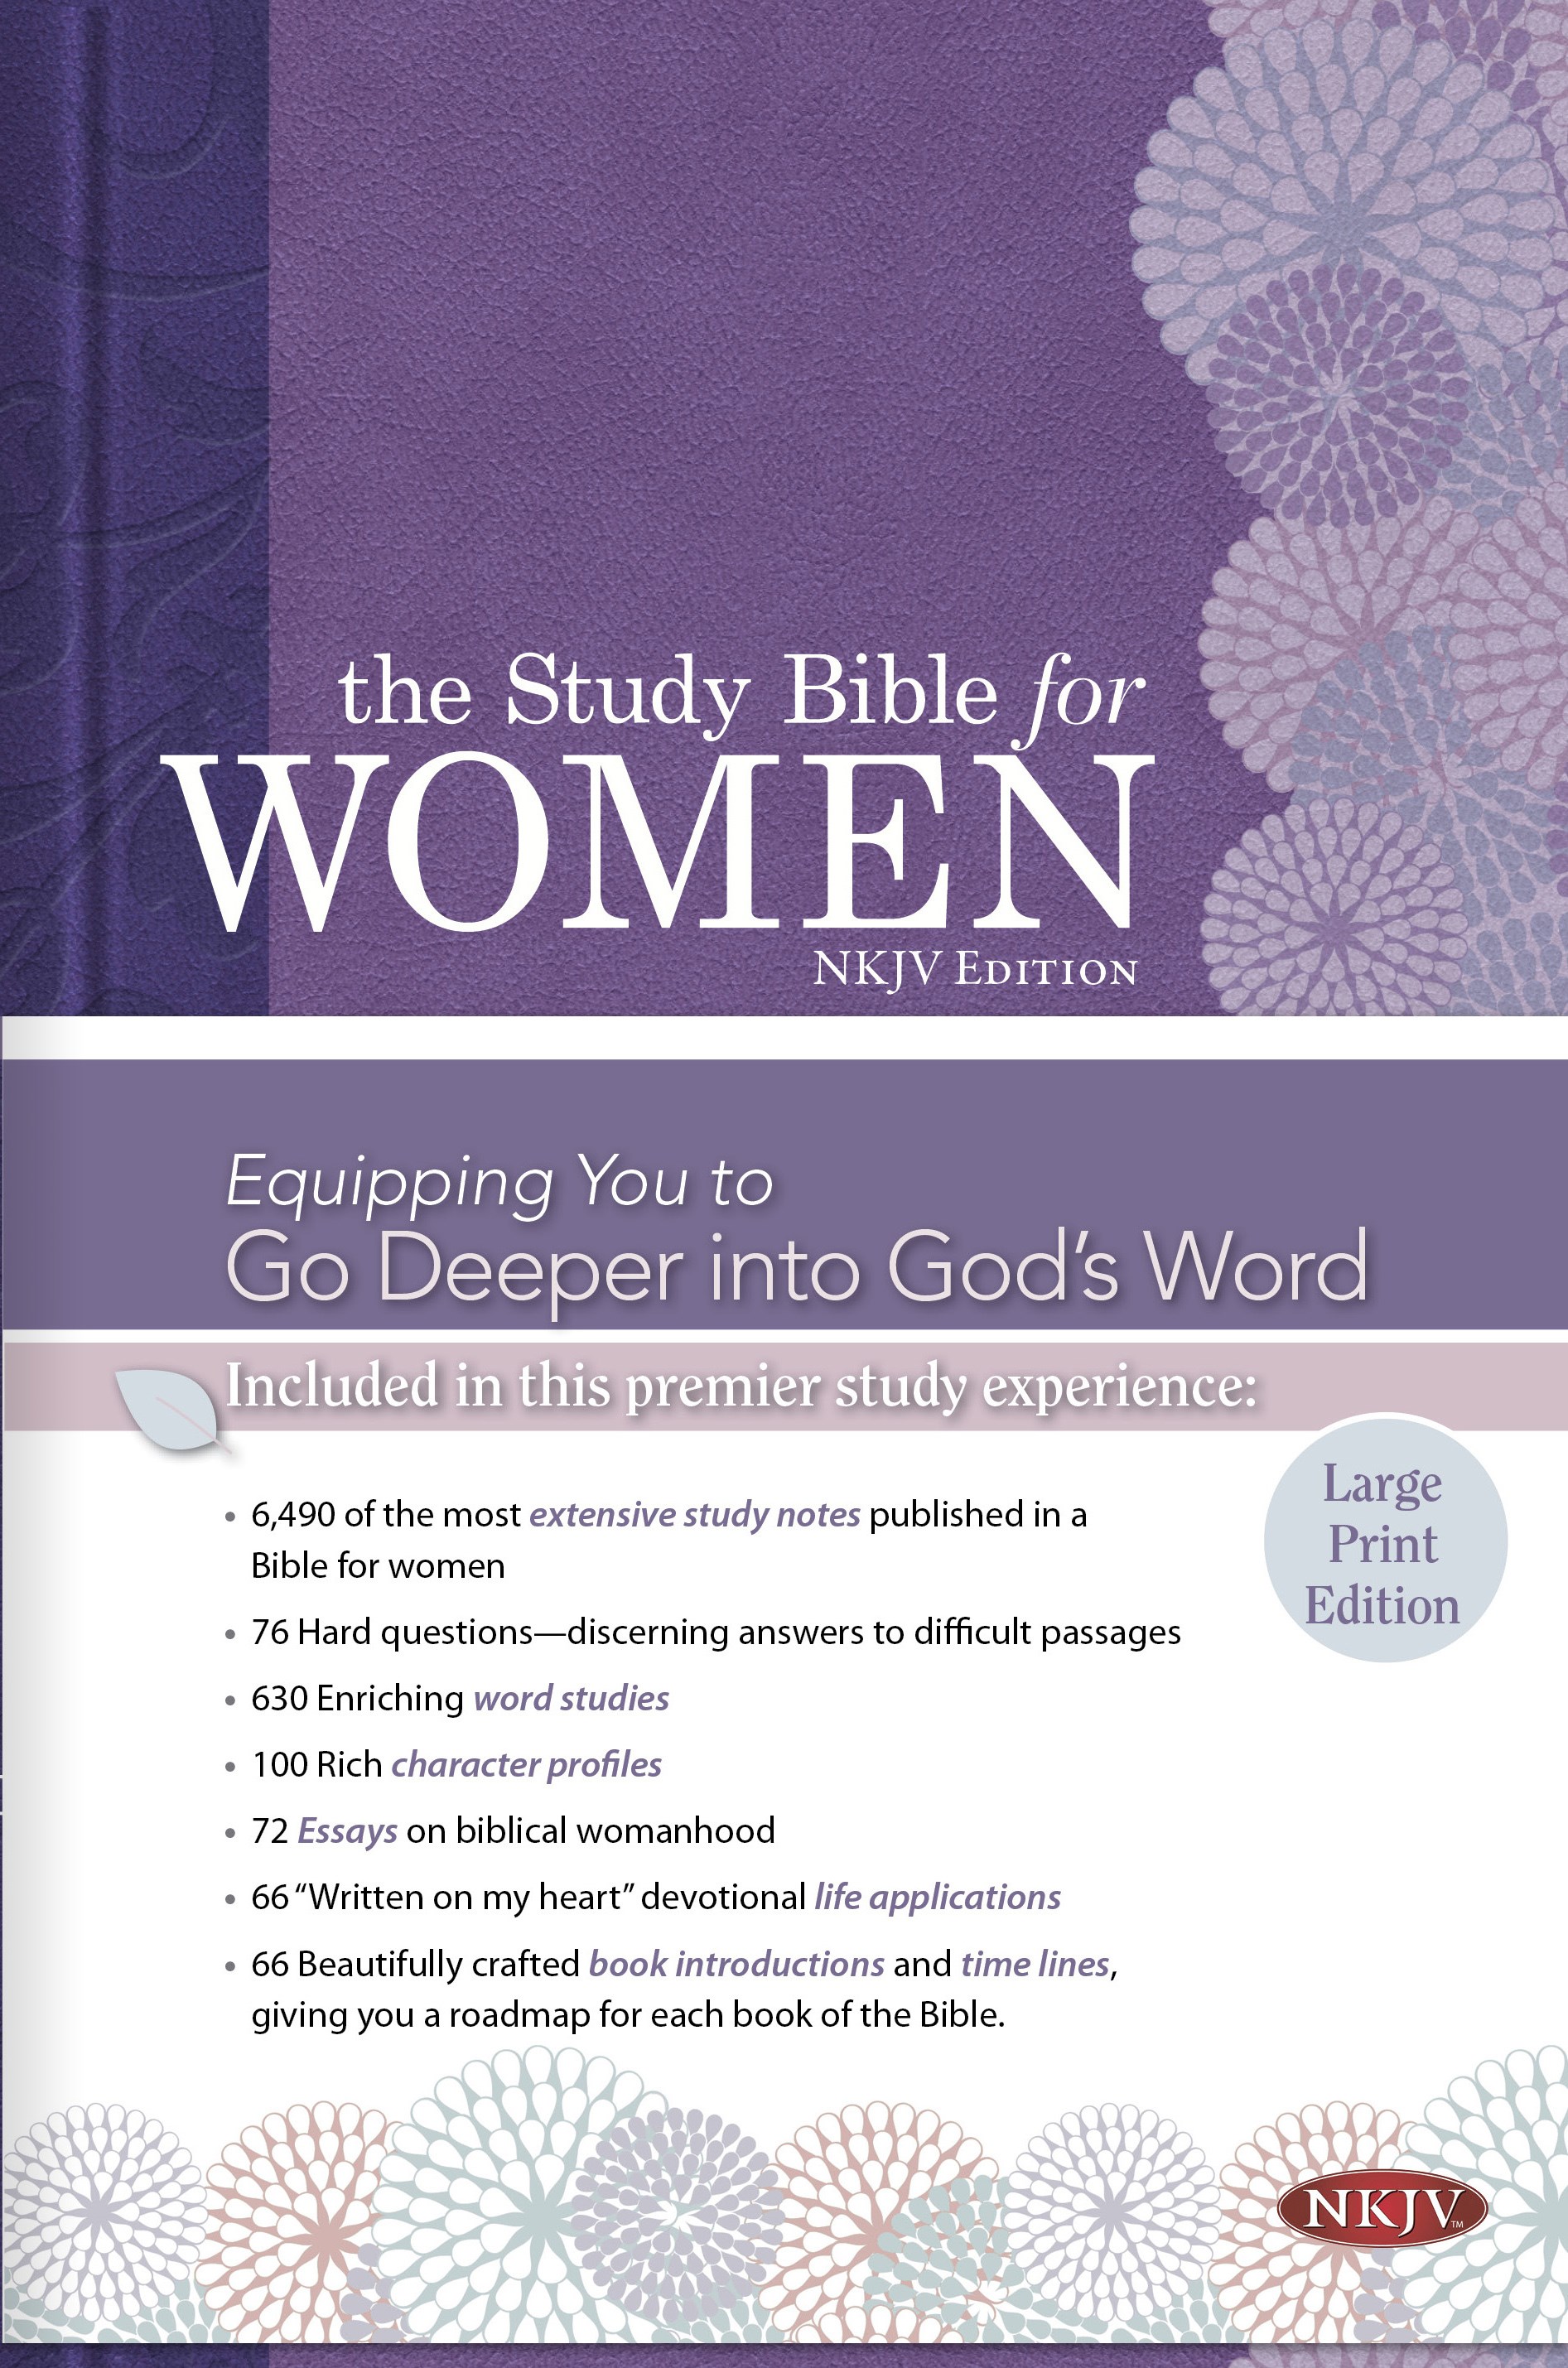 women-of-the-bible-study-book-sdirectdop